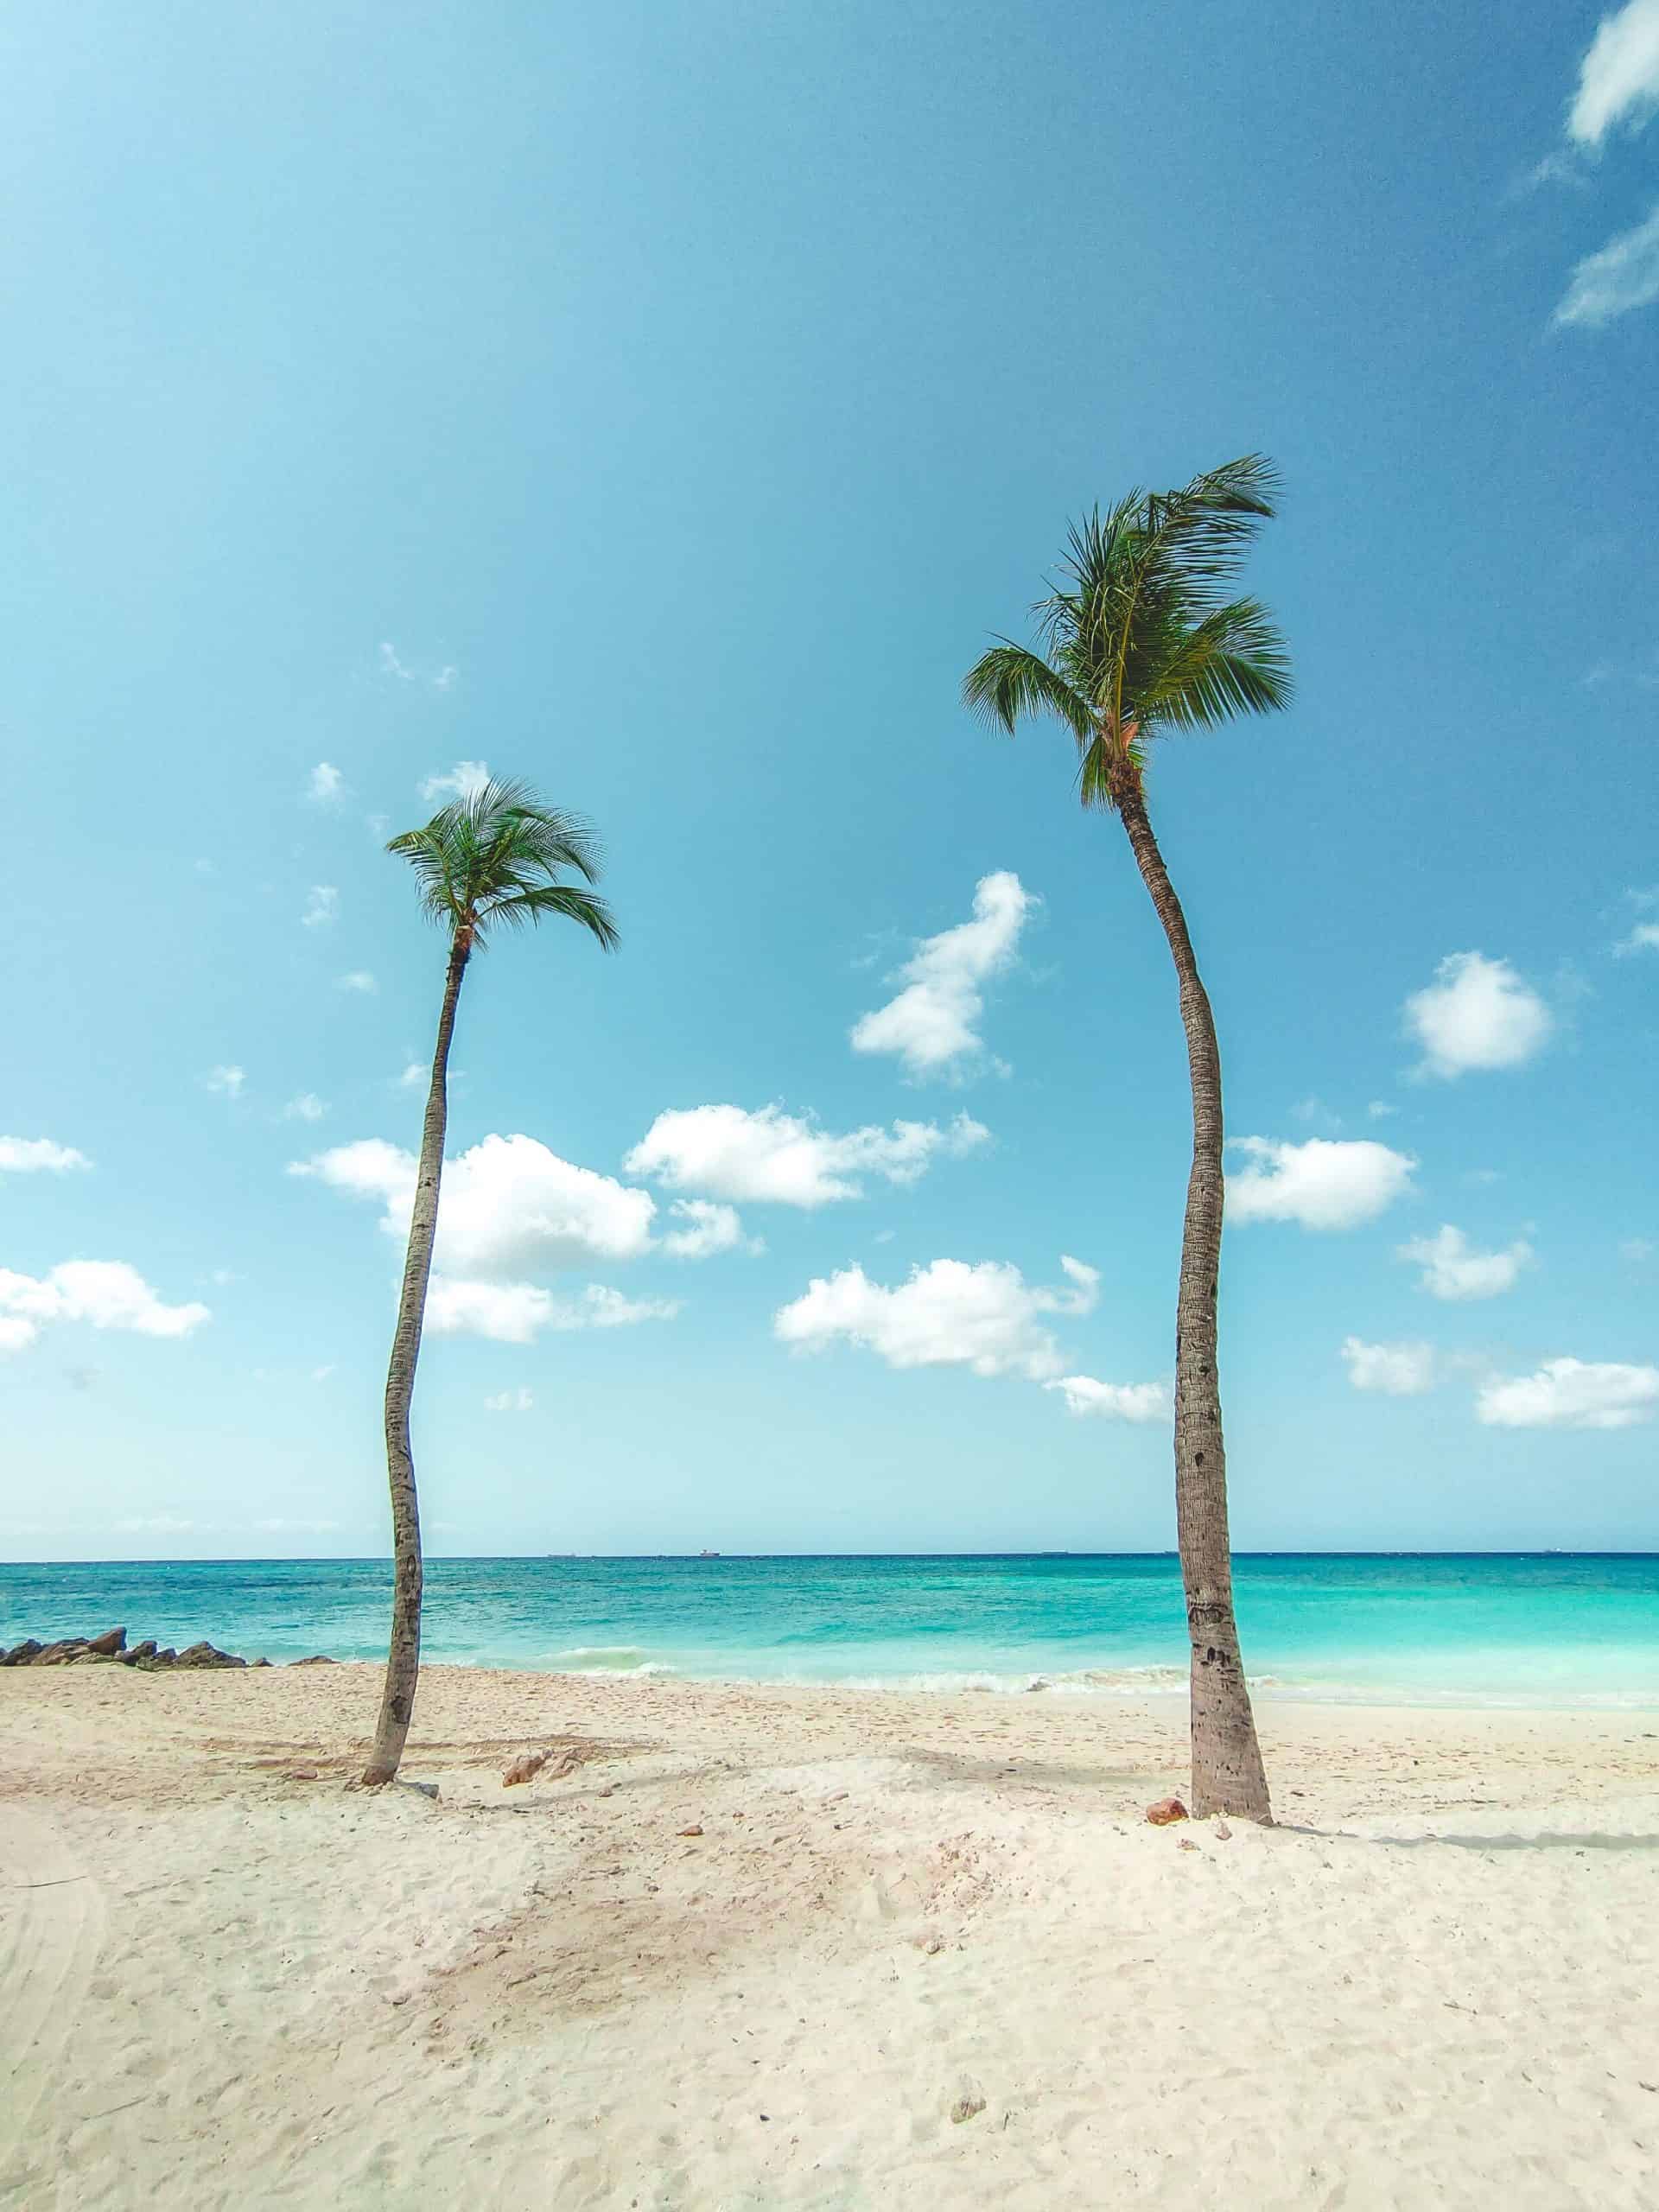 Eagle Beach - Antigua vs Aruba - Which is the Better Caribbean Vacation?